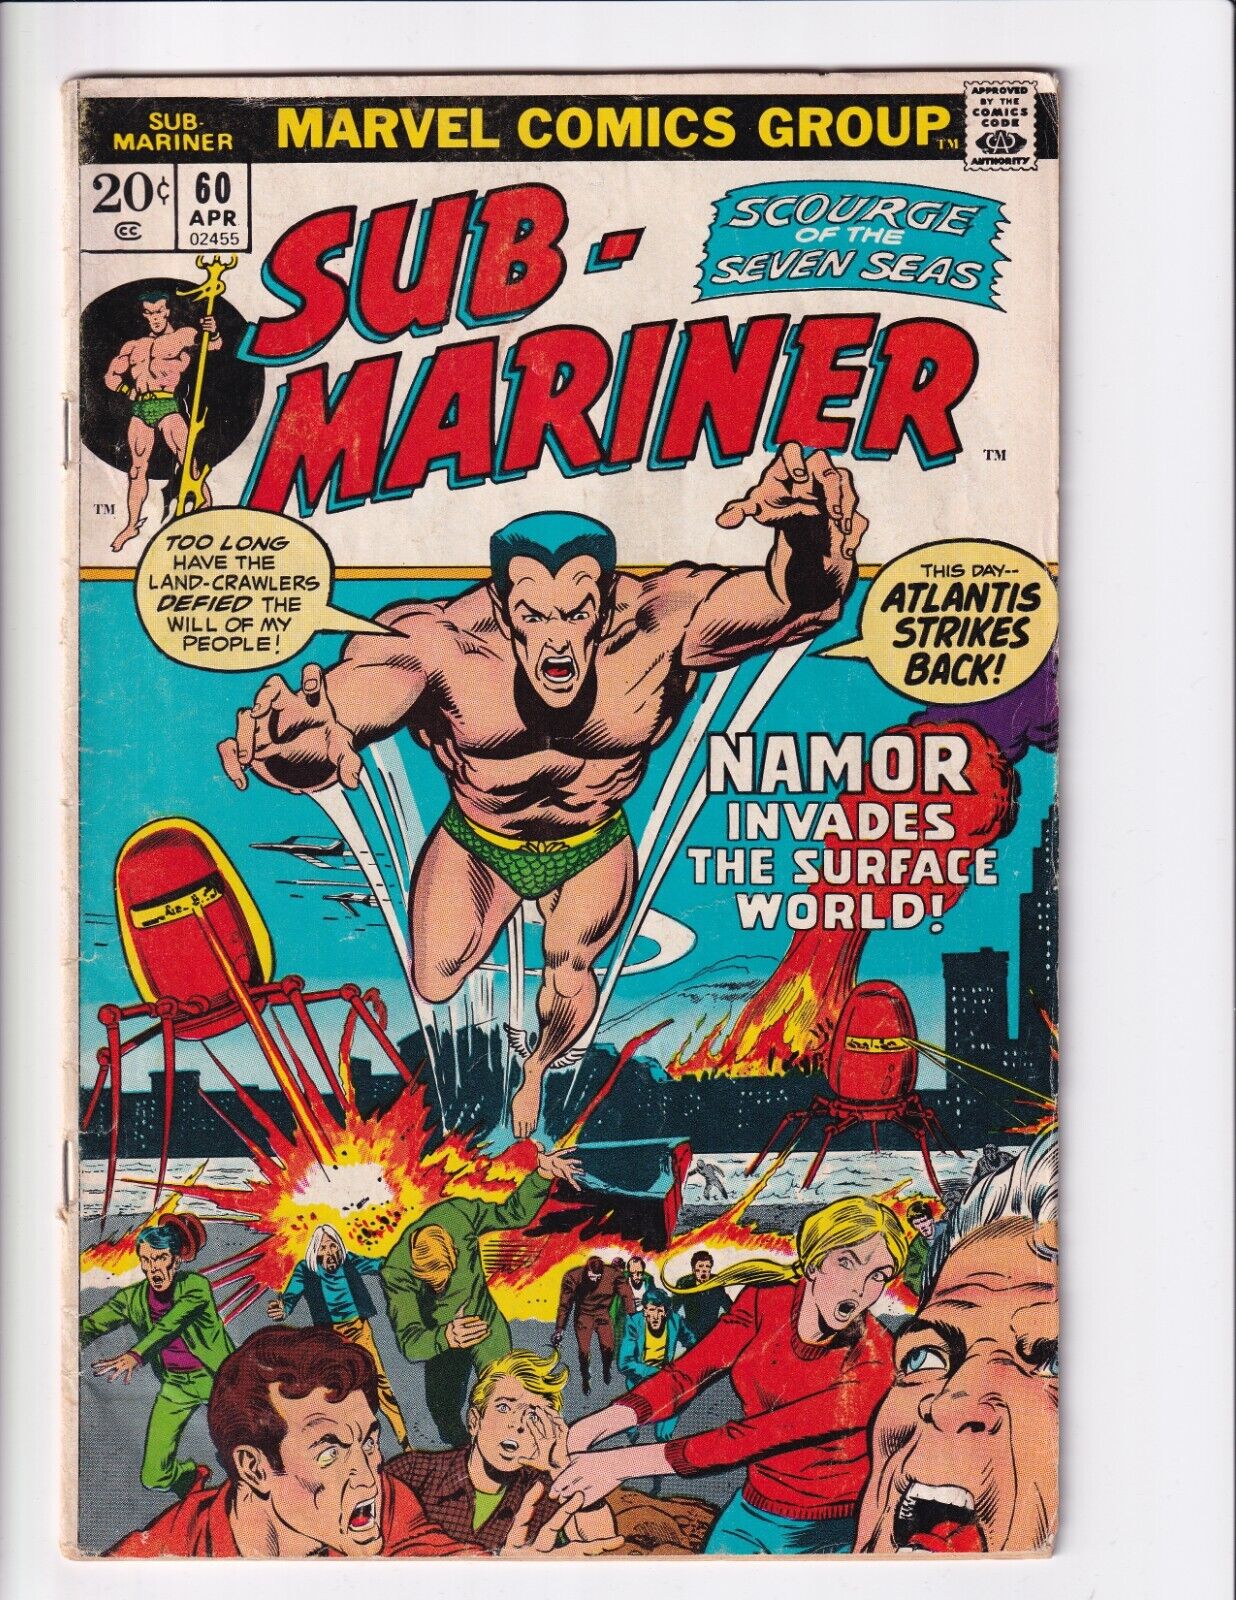 SUB-MARINER COMICS #60 - NAMOR INVADES THE SURFACE WORLD - VG+ CONDITION